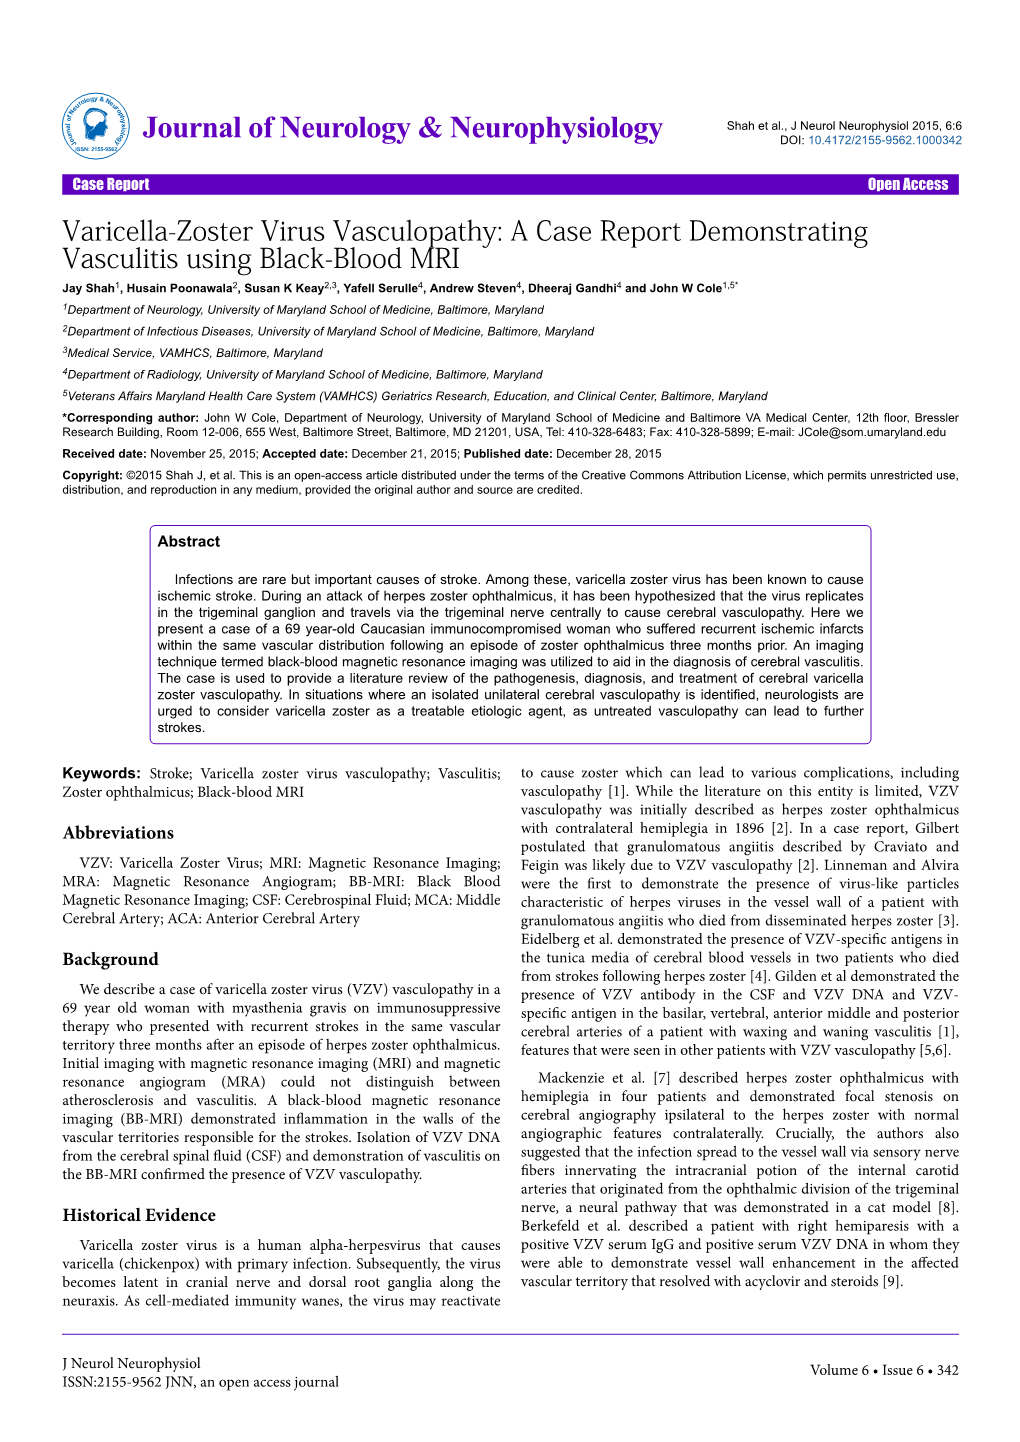 A Case Report Demonstrating Vasculitis Using Black-Blood